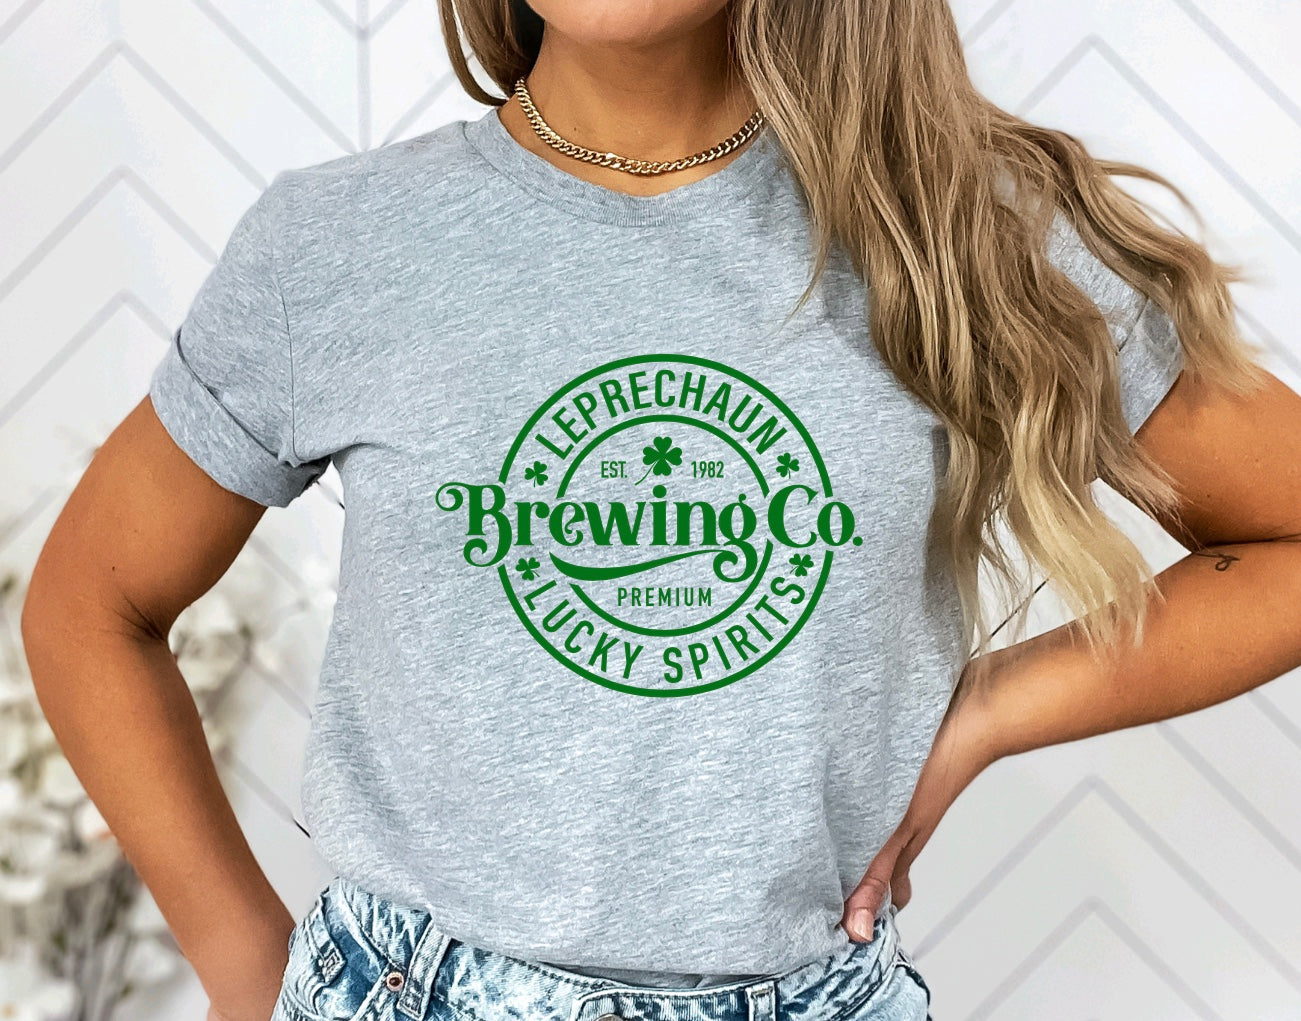 Leprechaun brewing company st patty’s day unisex t-shirt for women in heather light grey